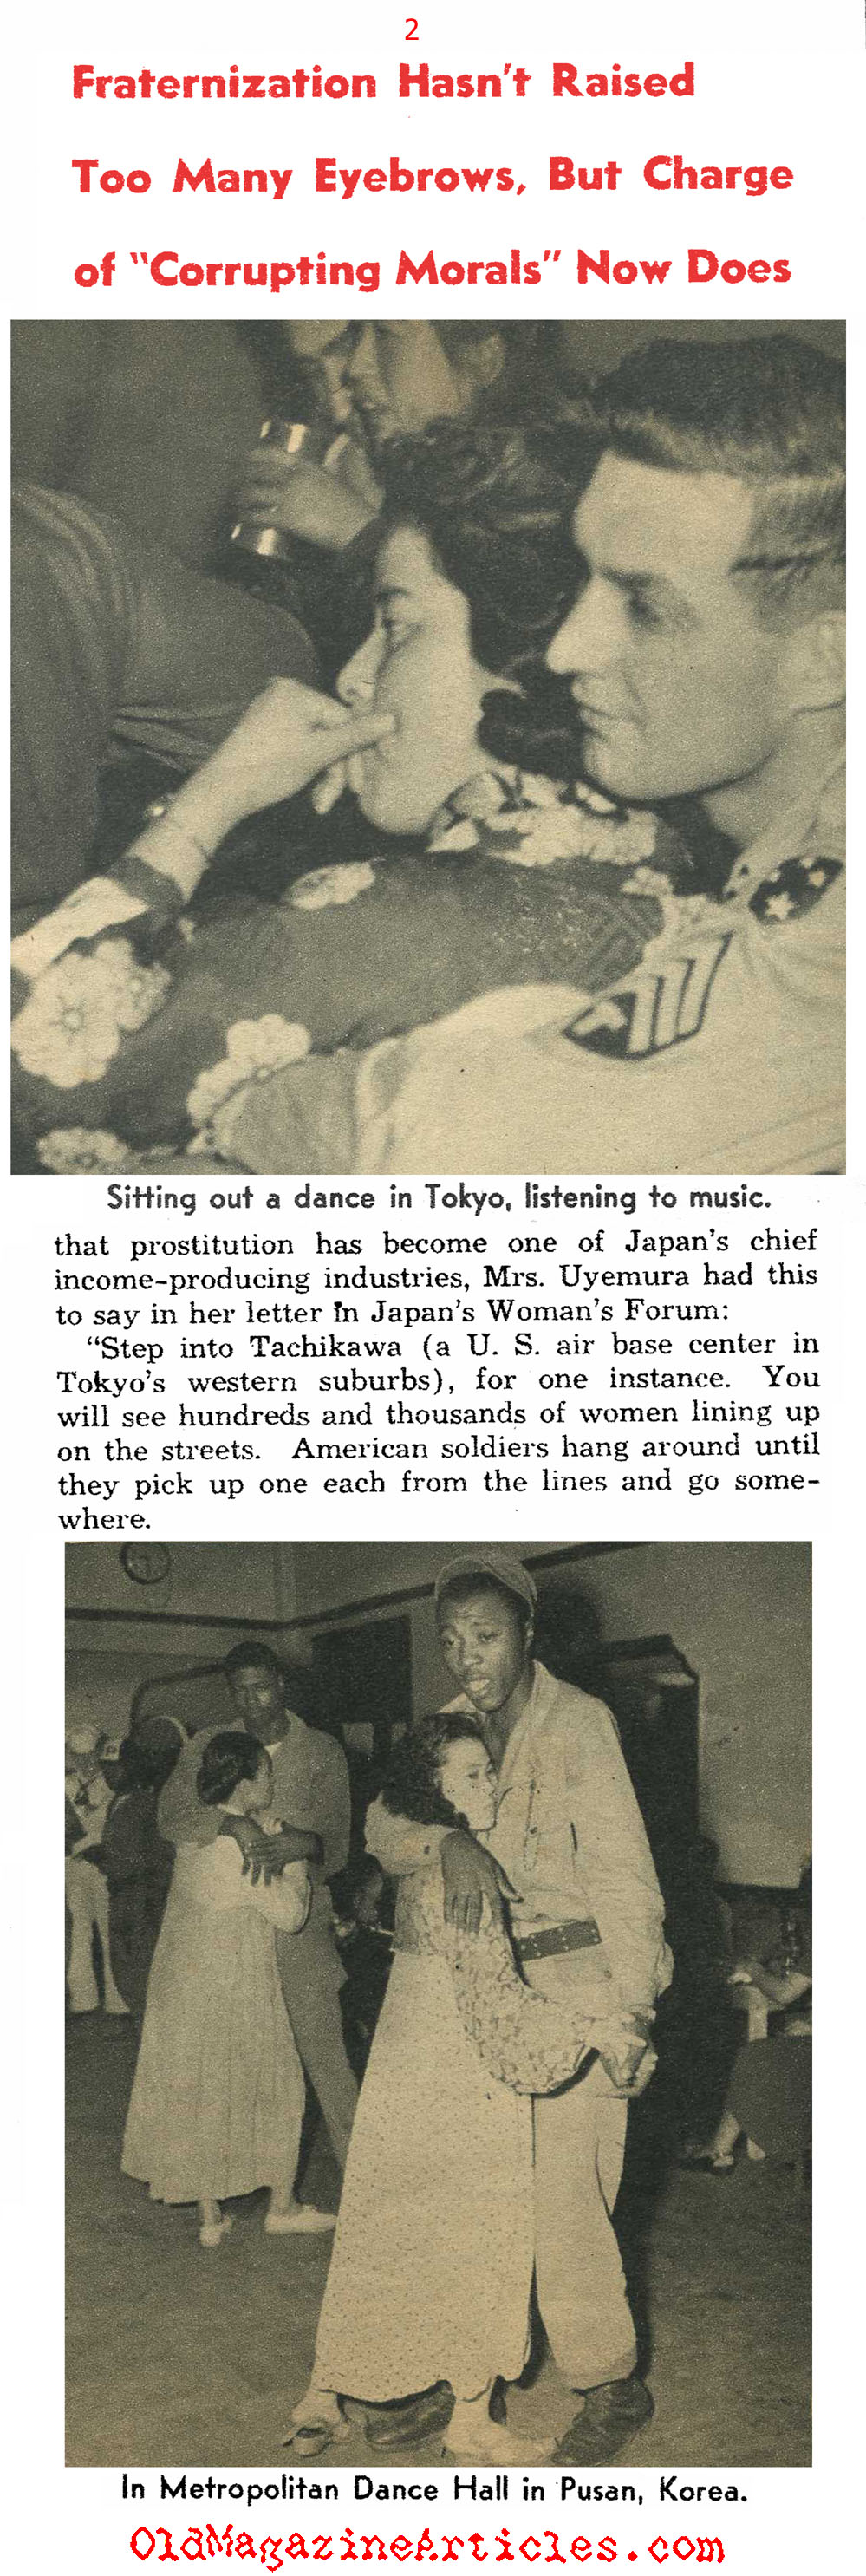 GI Joe and the Women of Japan... (Pic Magazine, 1952)